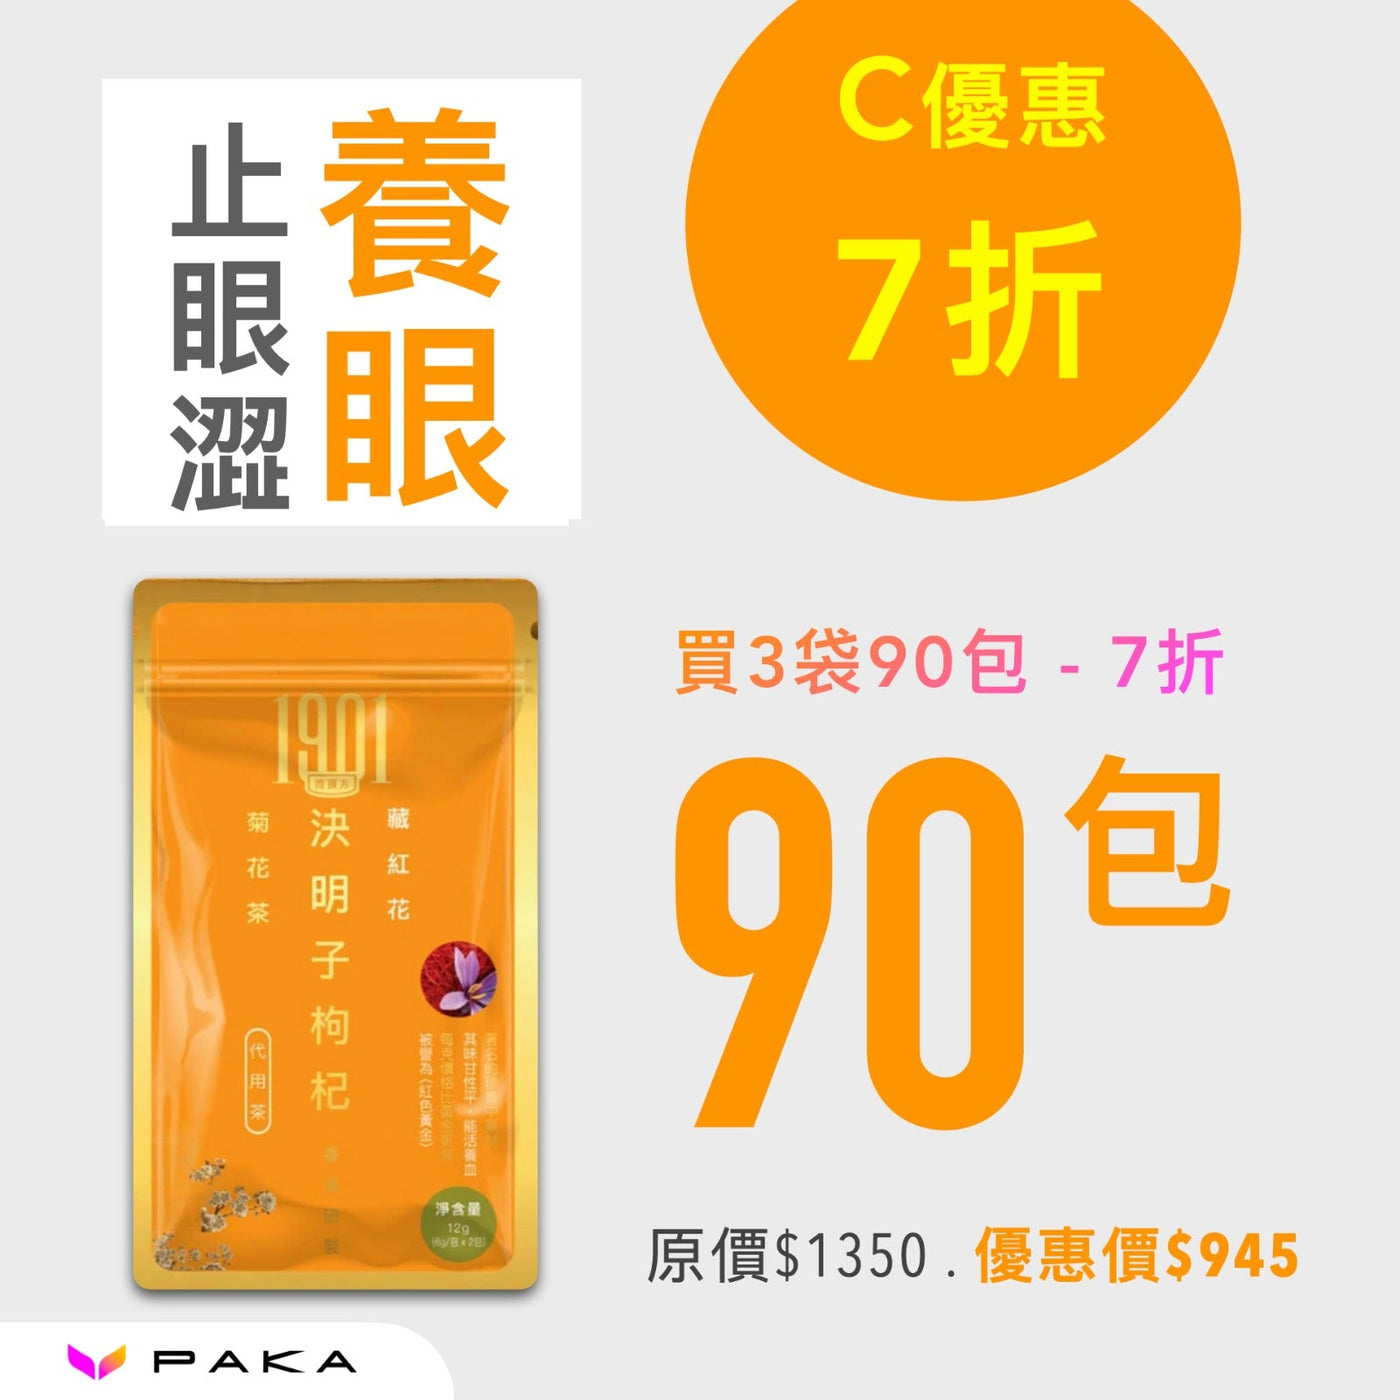 SALE: 養眼茶療 - 決明子枸杞菊花茶 Functional Tea 1901 90包 7折 